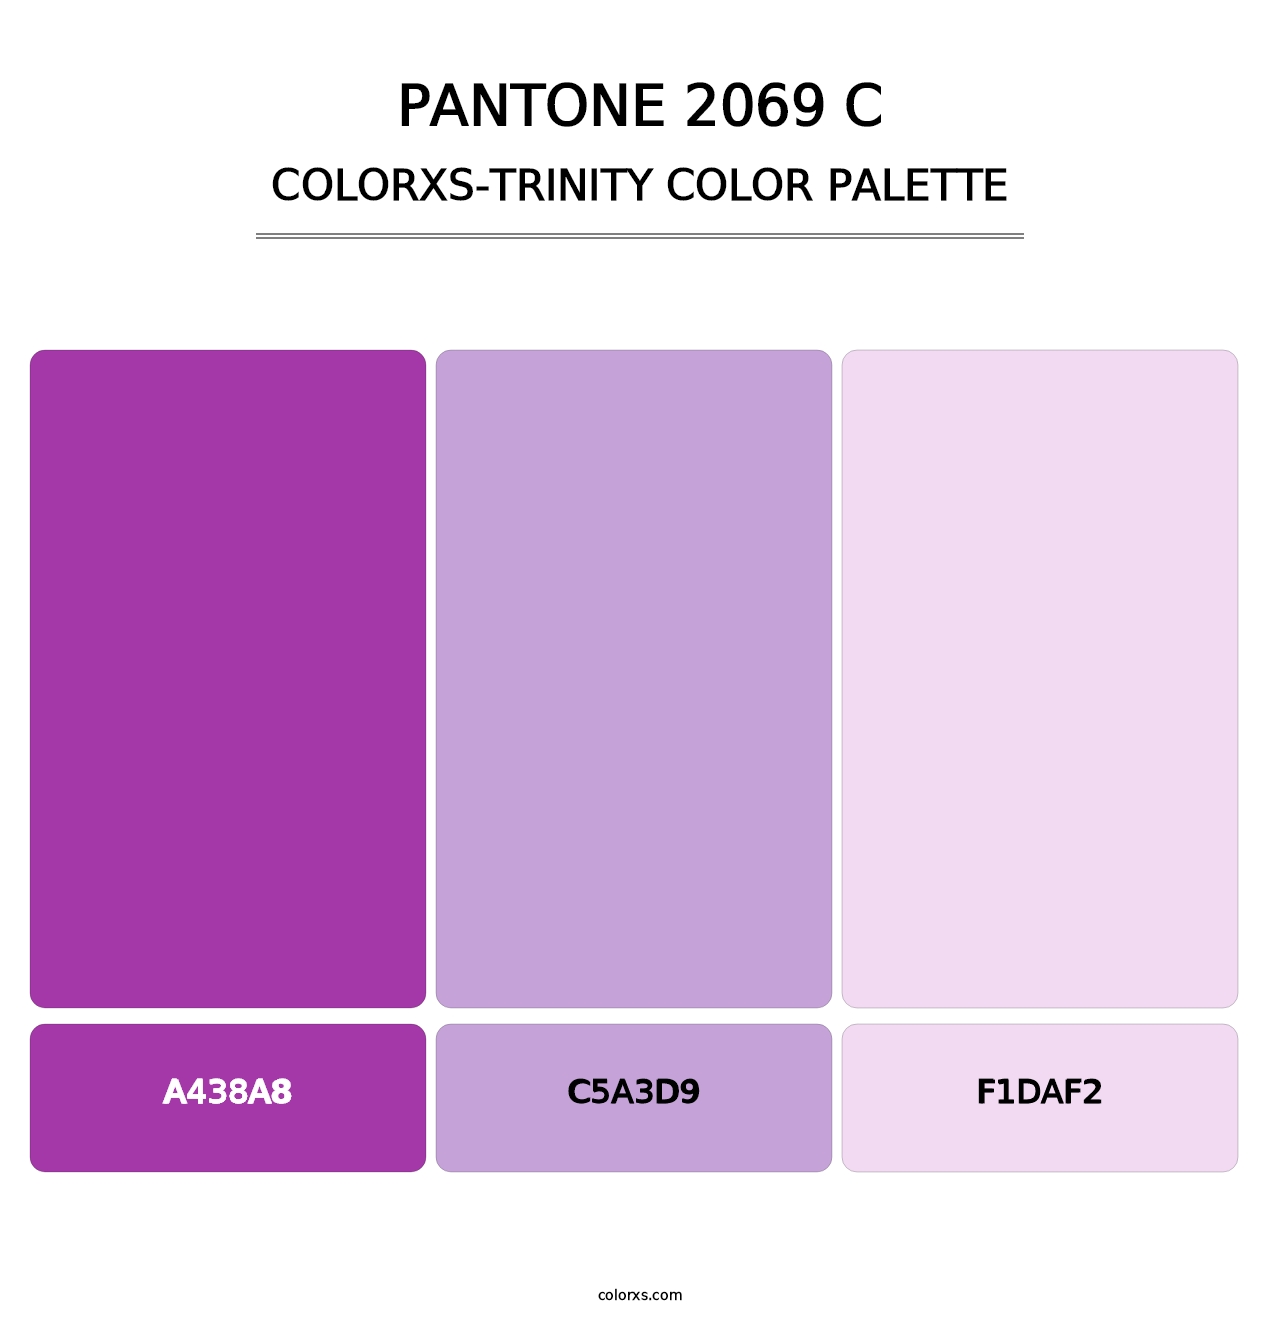 PANTONE 2069 C - Colorxs Trinity Palette